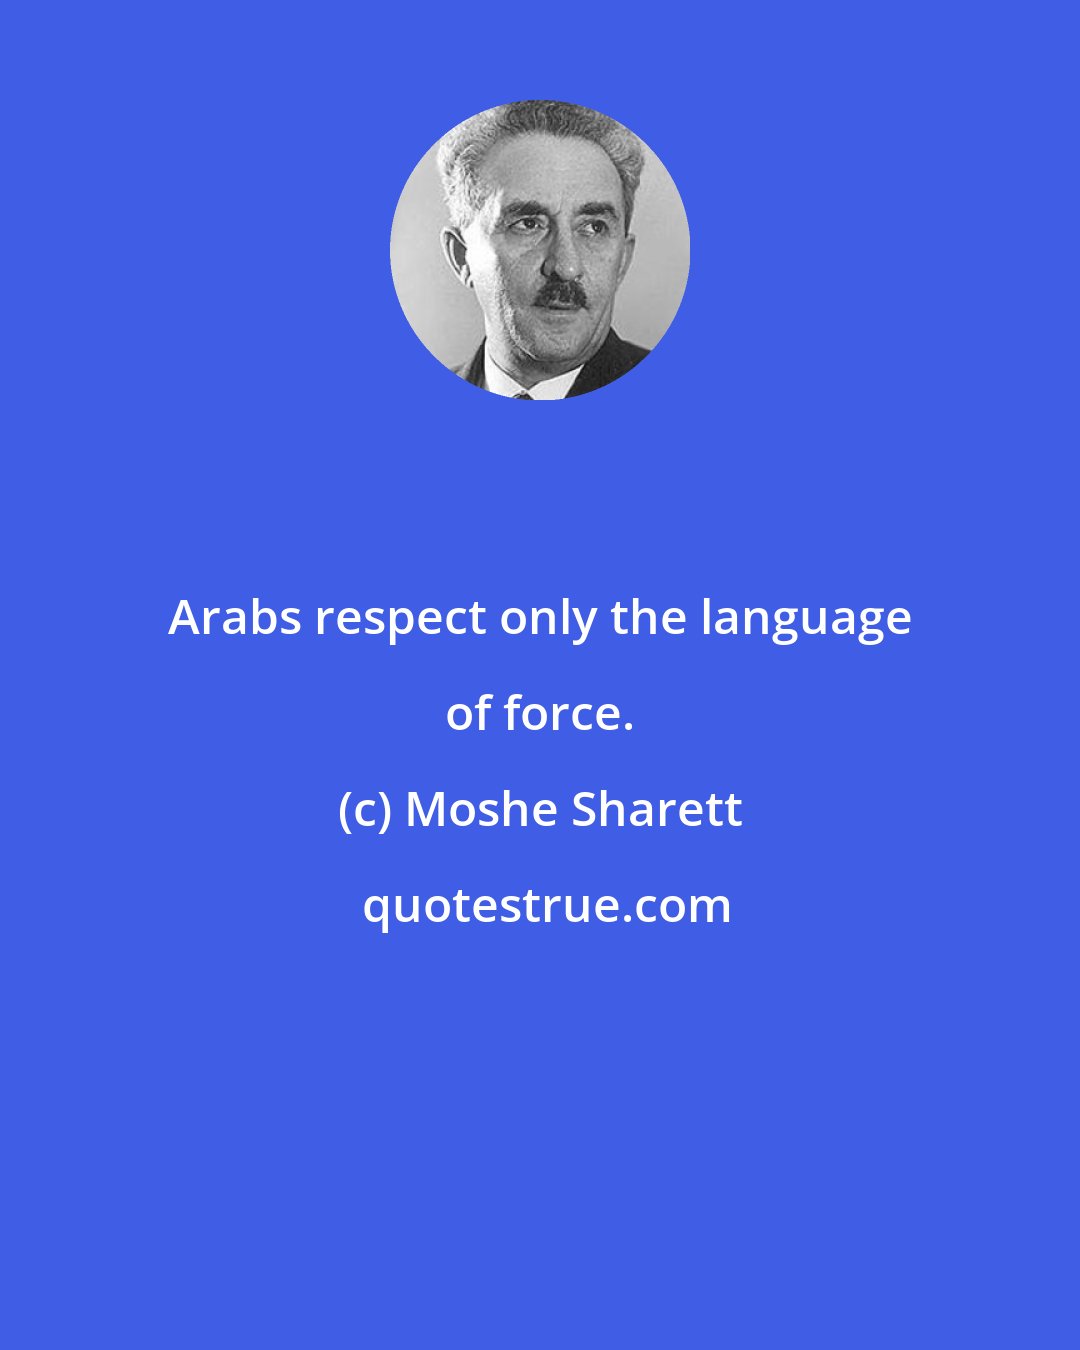 Moshe Sharett: Arabs respect only the language of force.